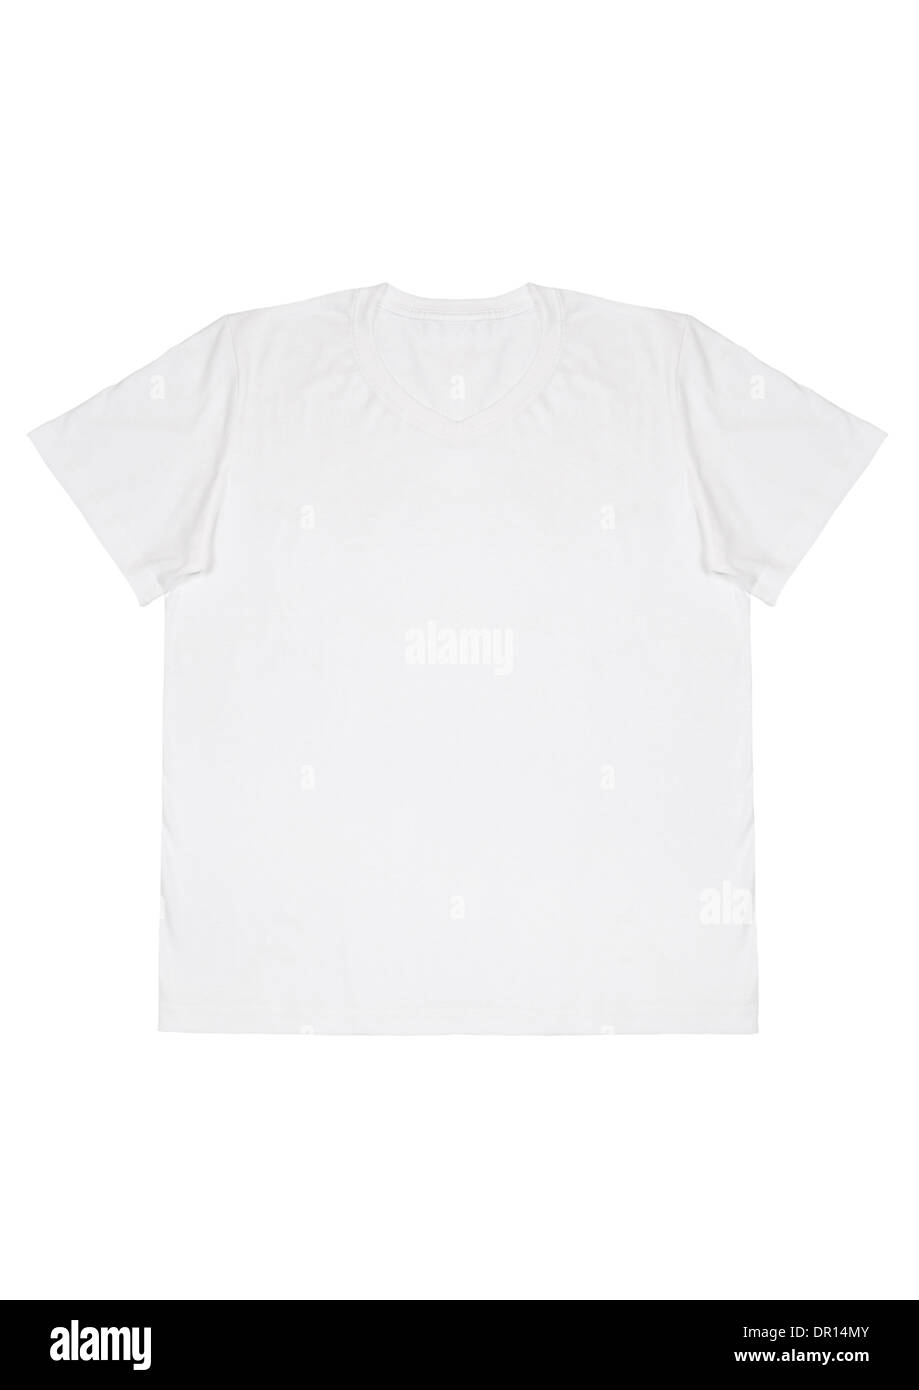 White v neck t-shirt on white background Stock Photo